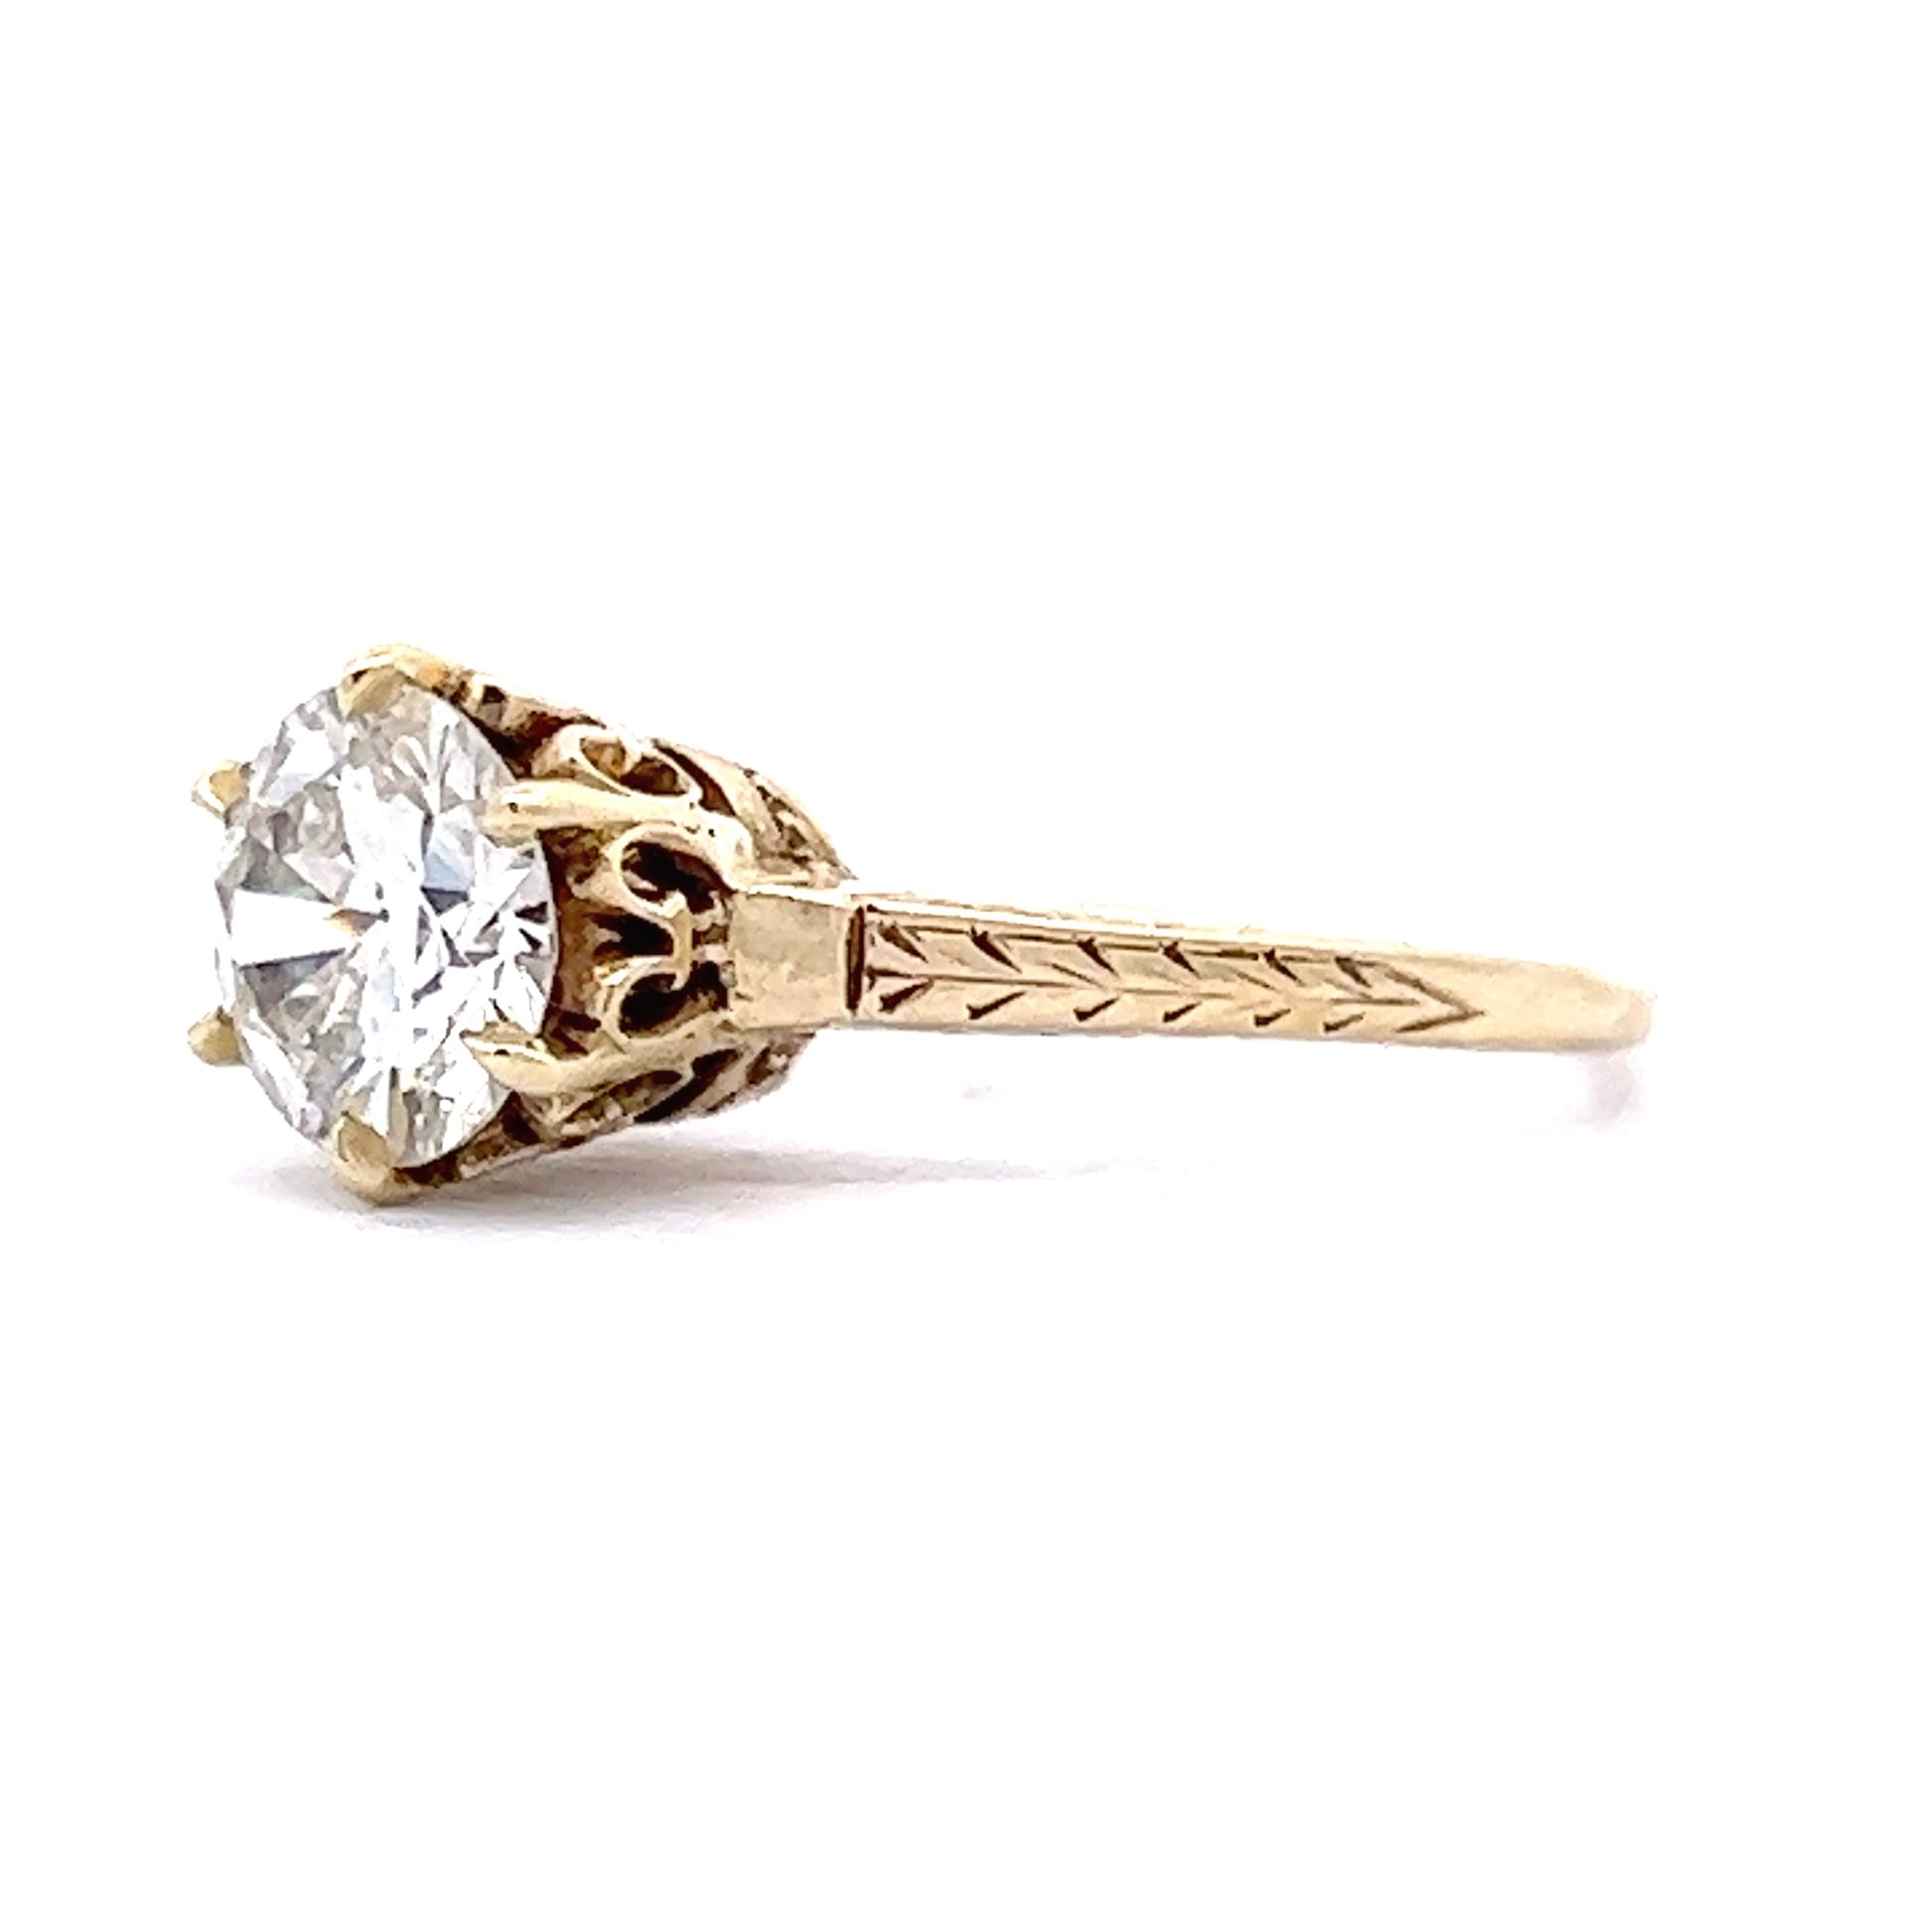 1.26 carat Six Stone Diamond Ring on 14K Gold